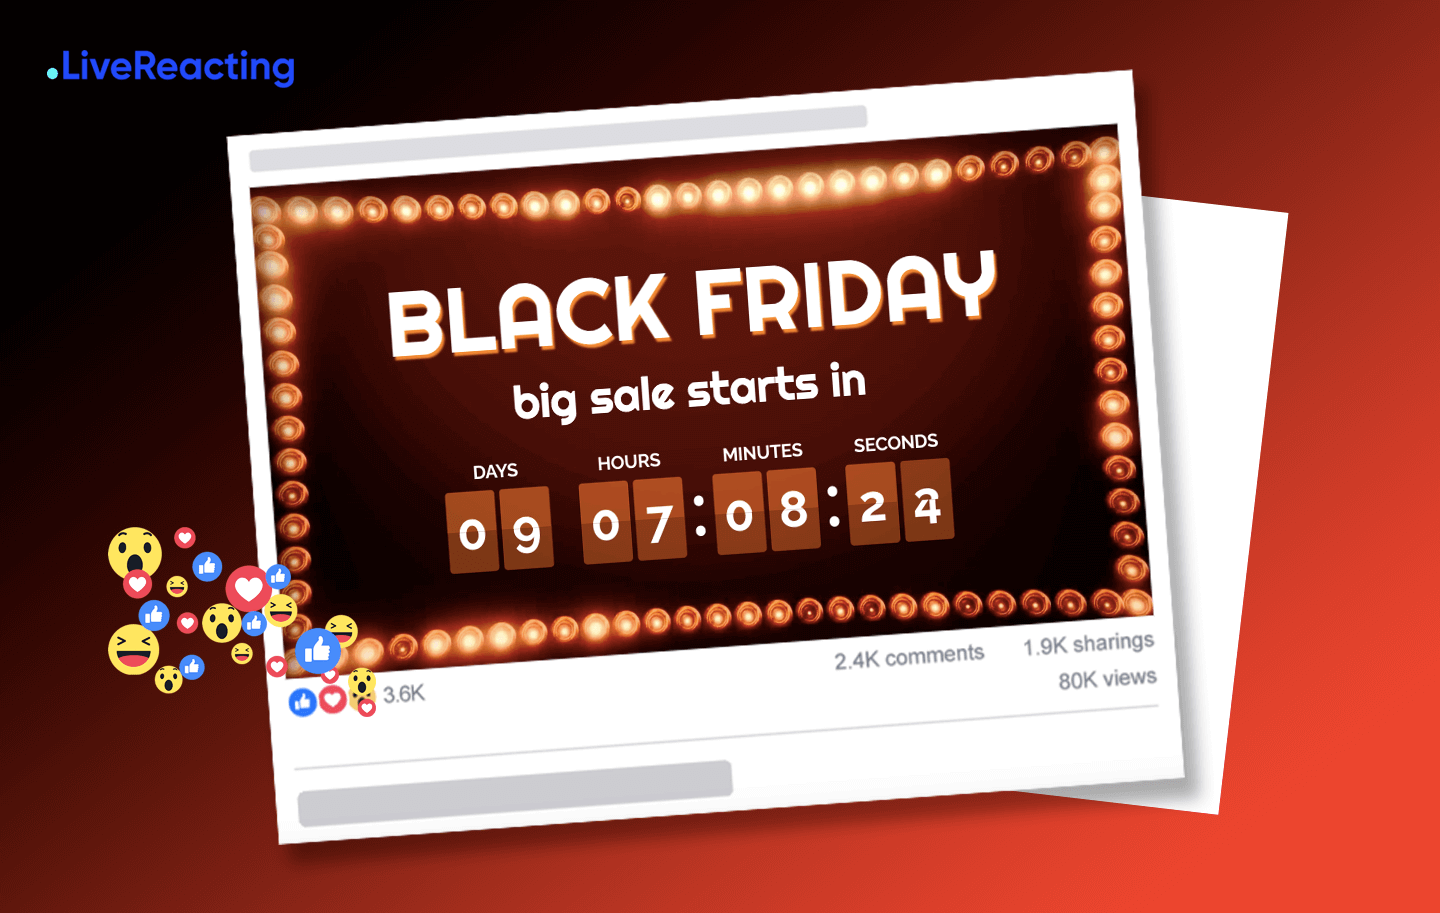 Black Friday Video Content Marketing Ideas